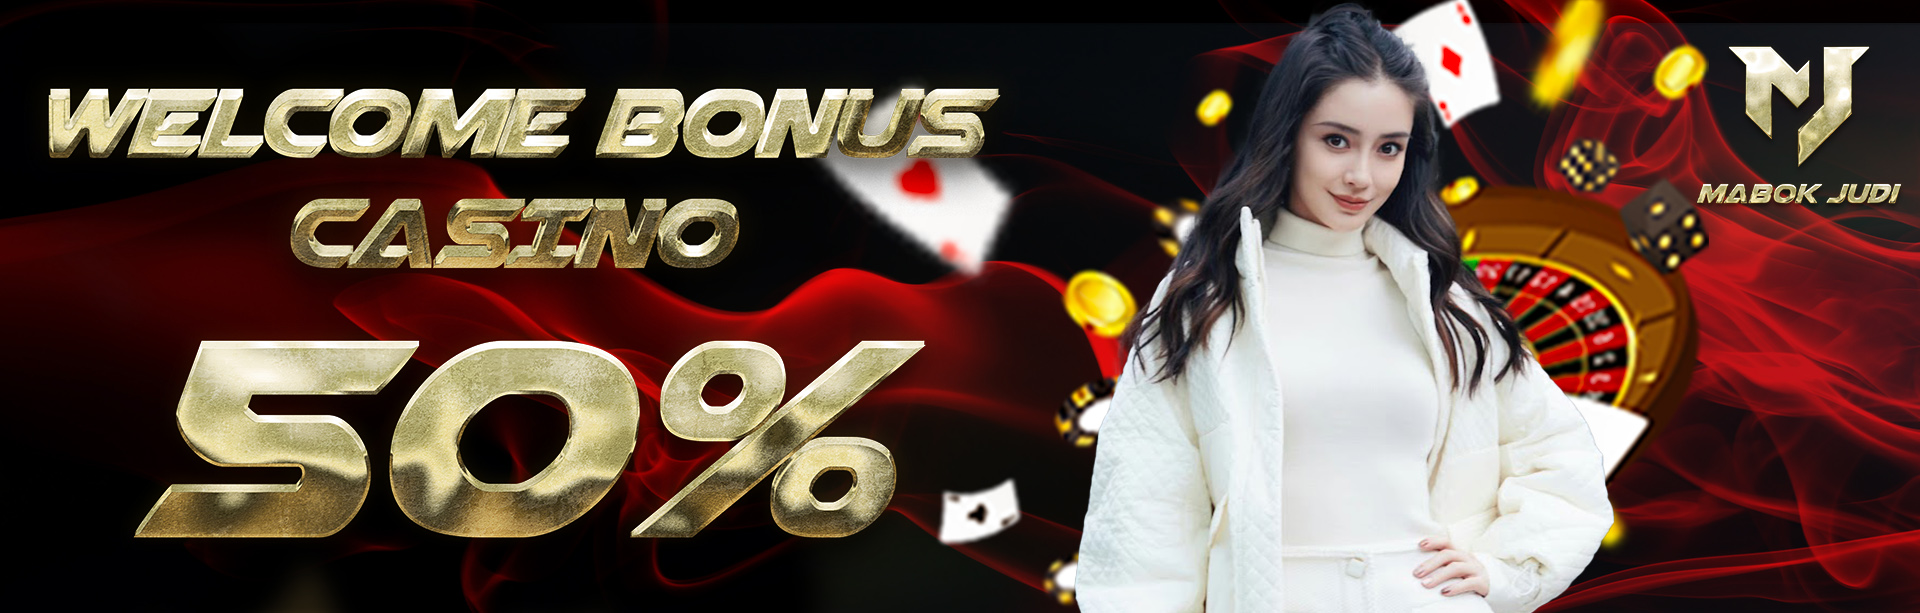 WELCOME BONUS CASINO 50%